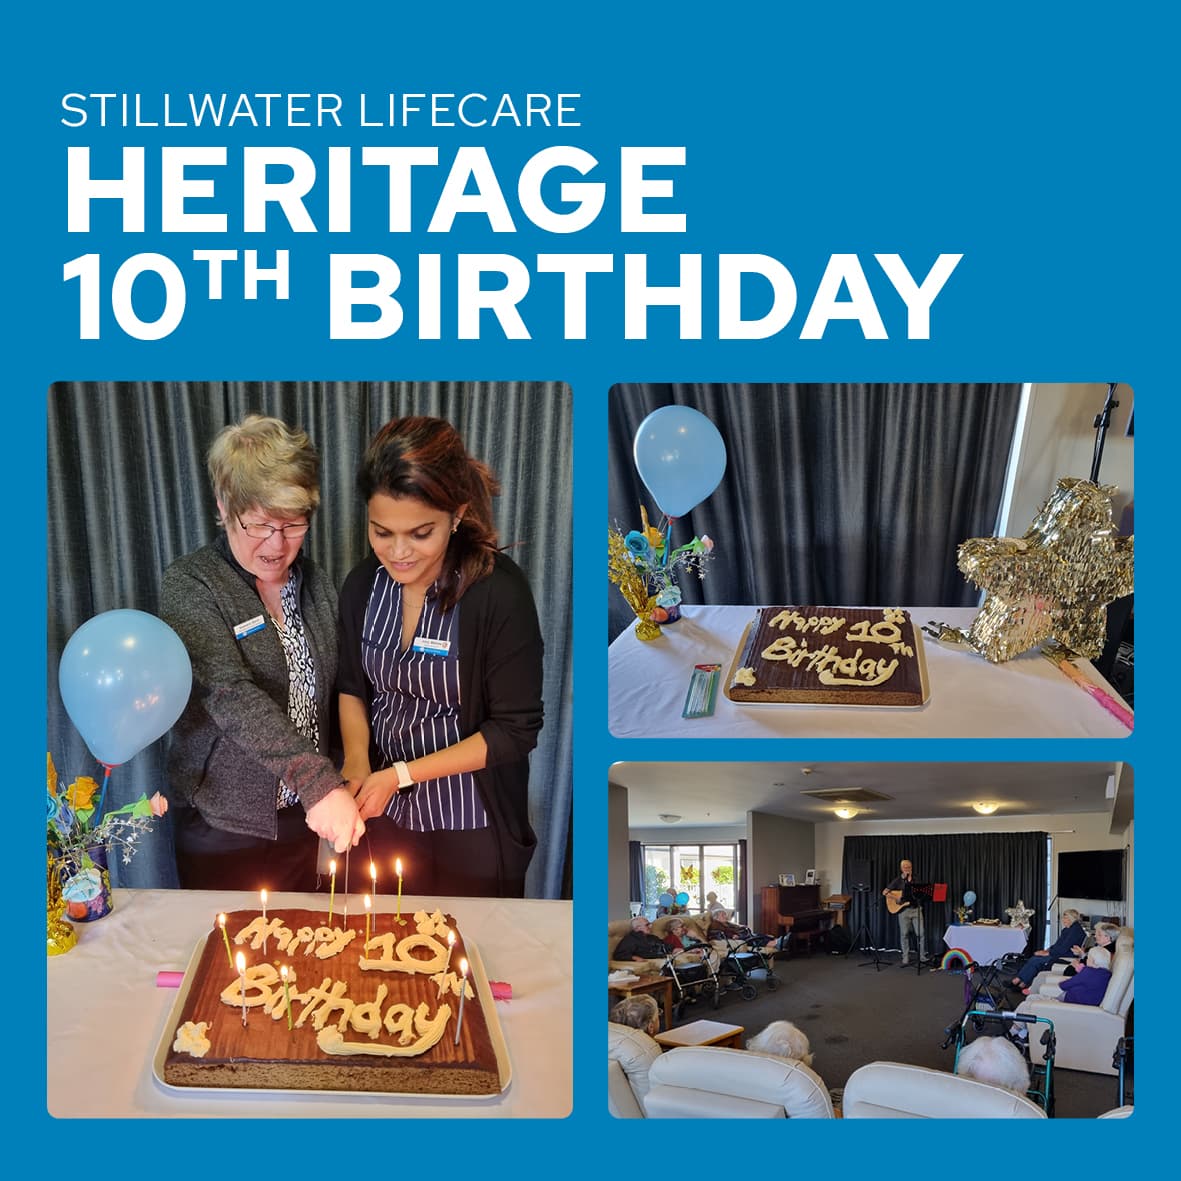 Stillwater Lifecare & Village celebrates Heritage Lifecare's 10th birthday